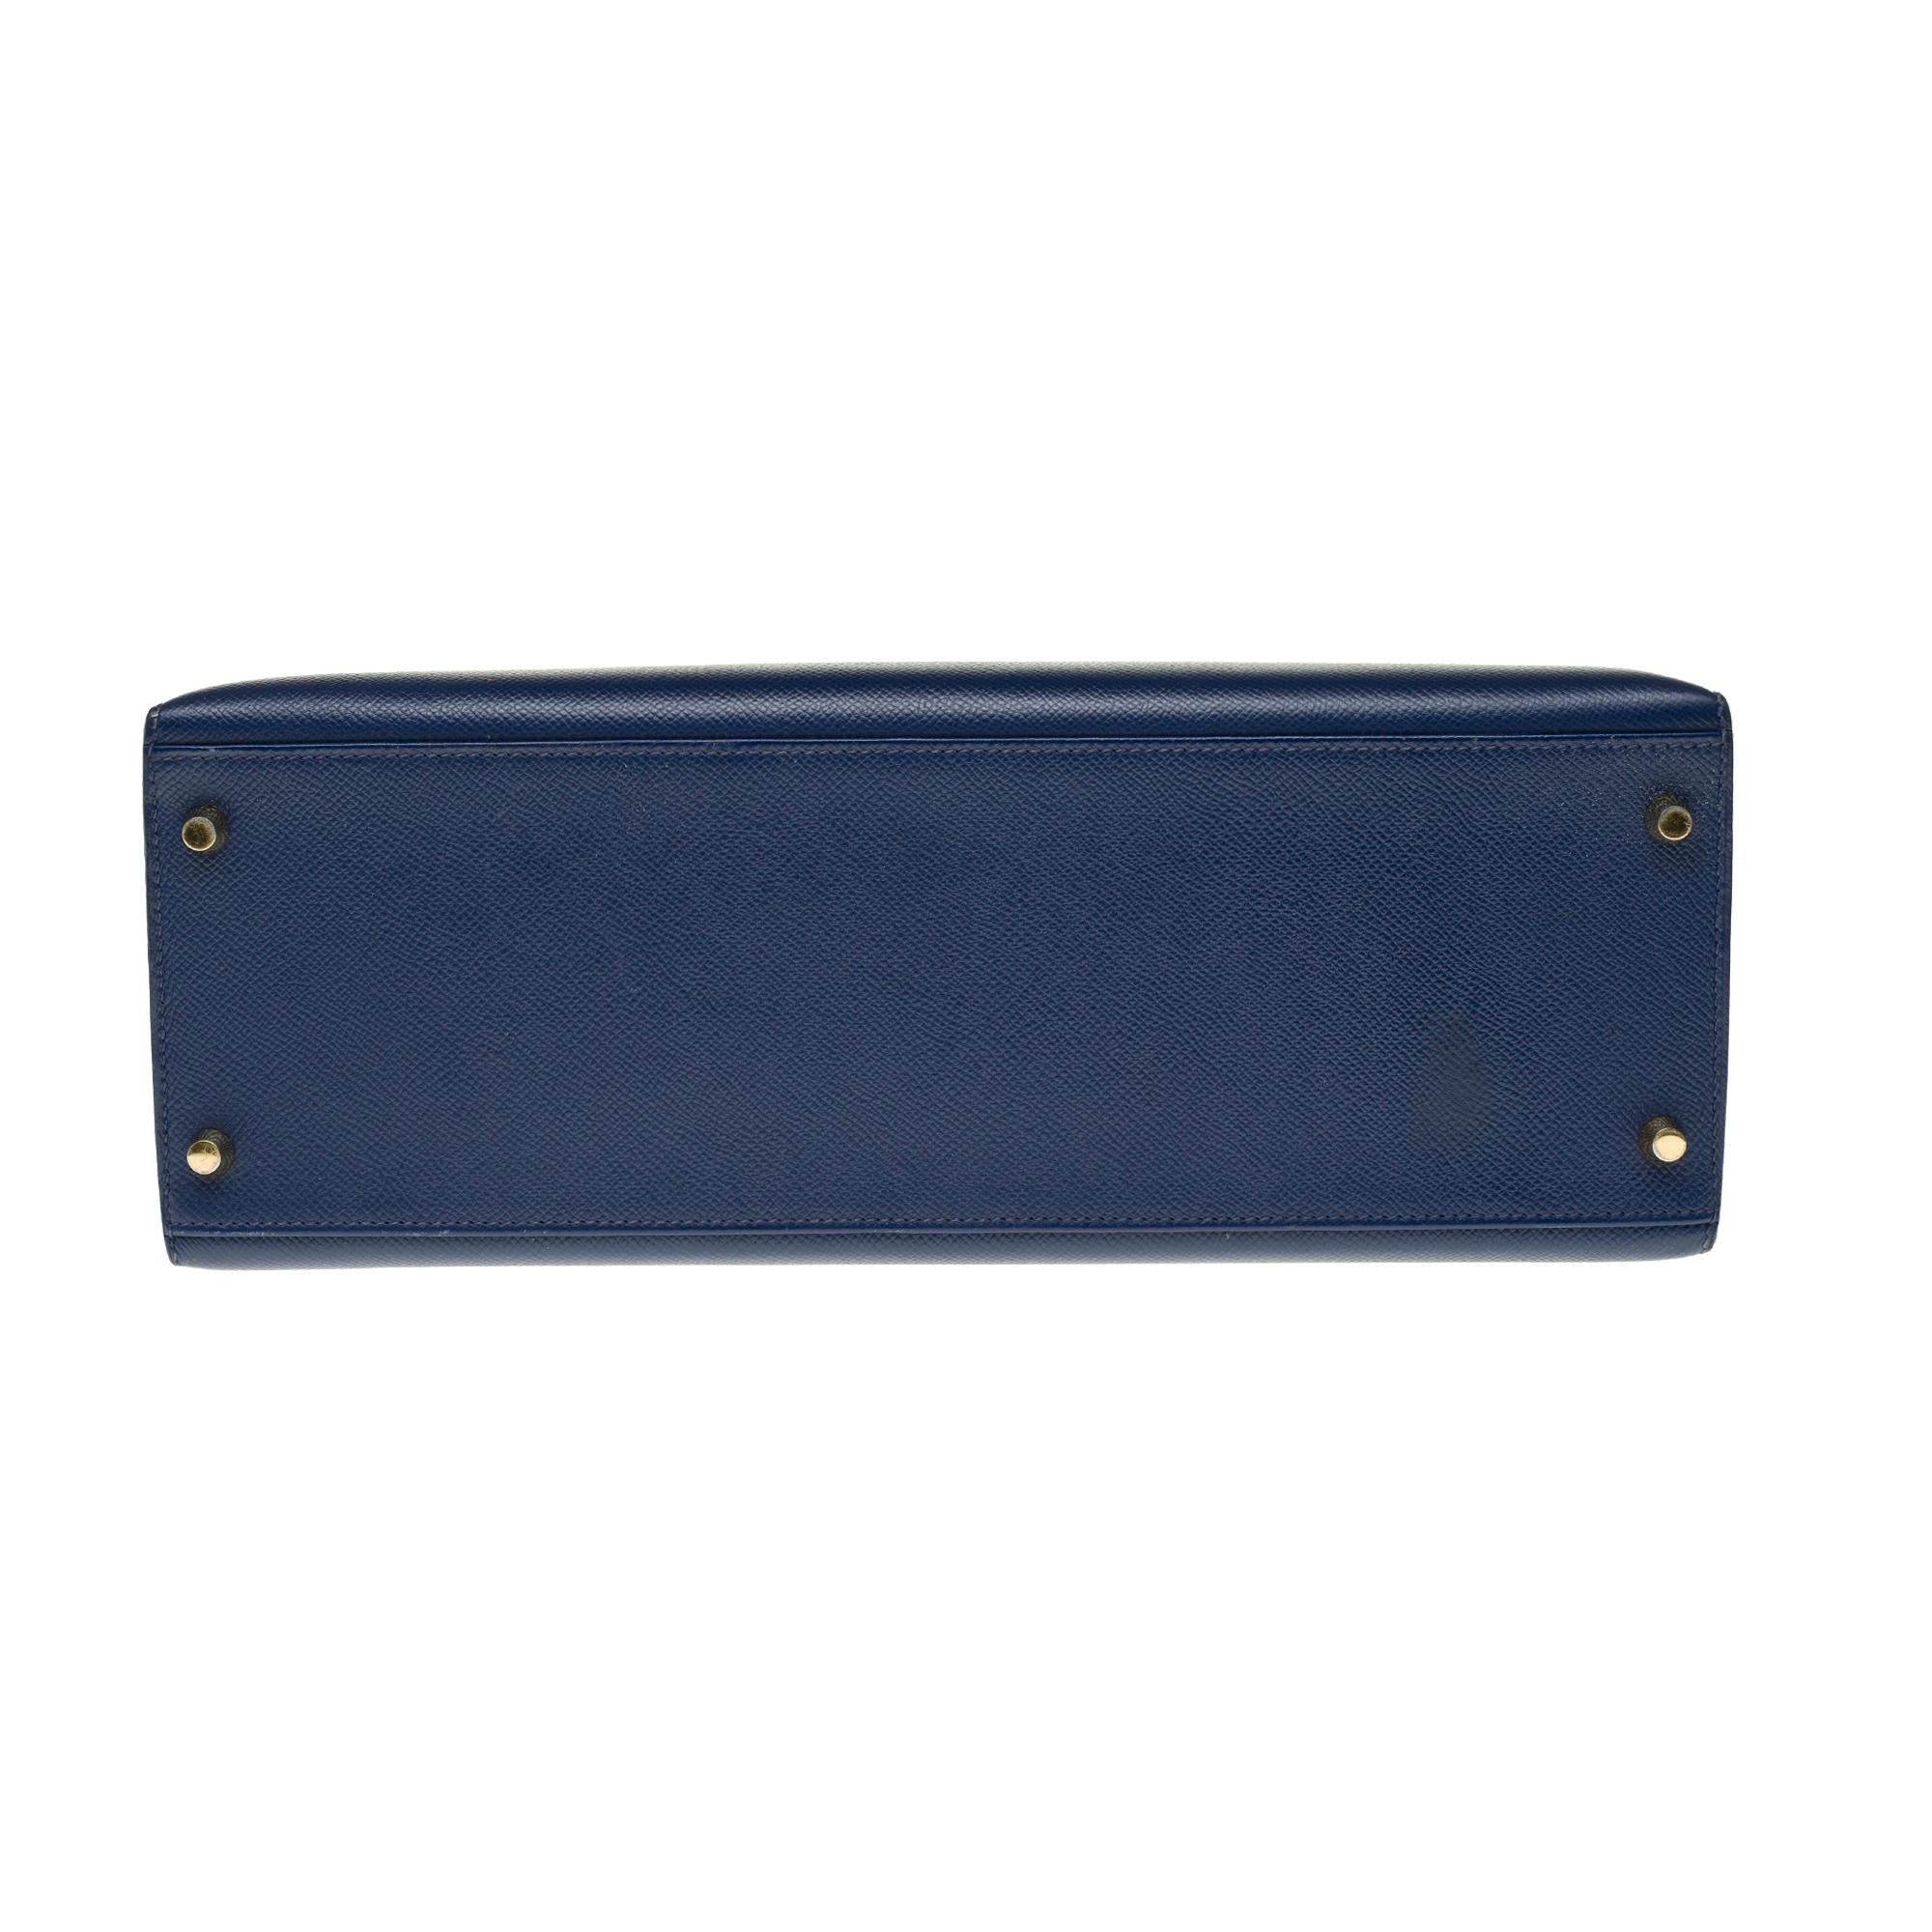 Hermès Kelly 35 sellier strap shoulder bag in epsom blue saphir, PHW 5